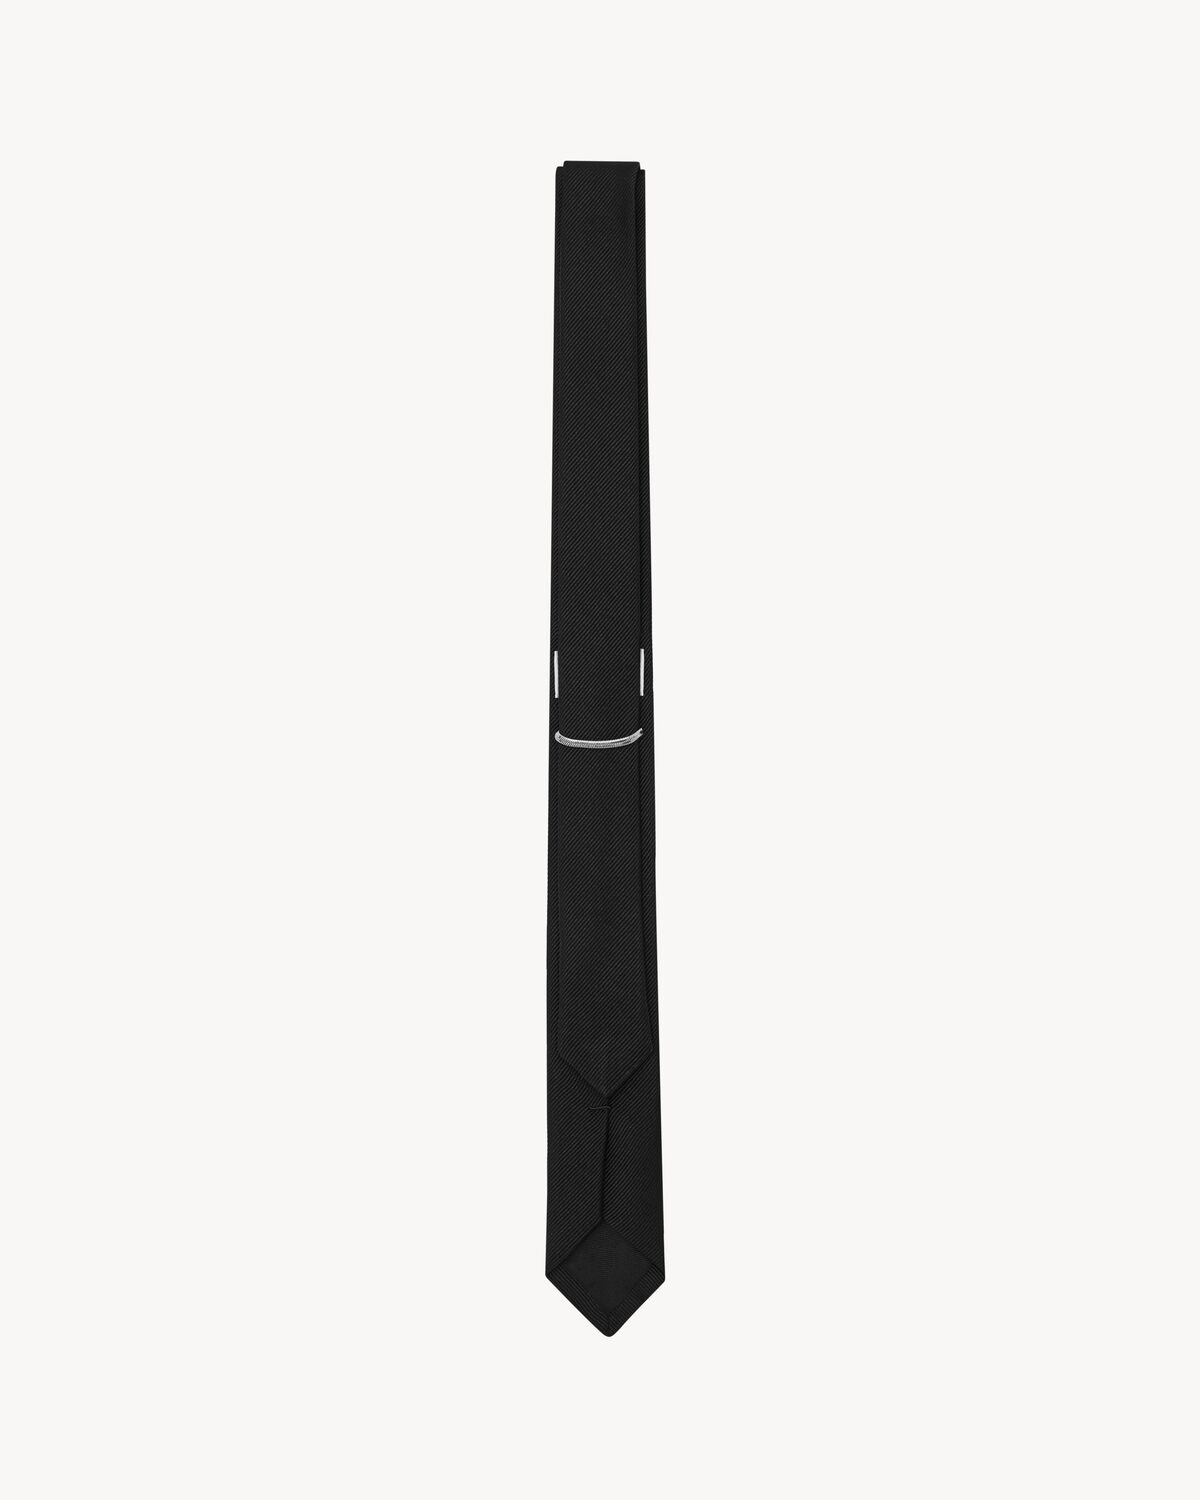 signature evening skinny tie in black silk grosgrain